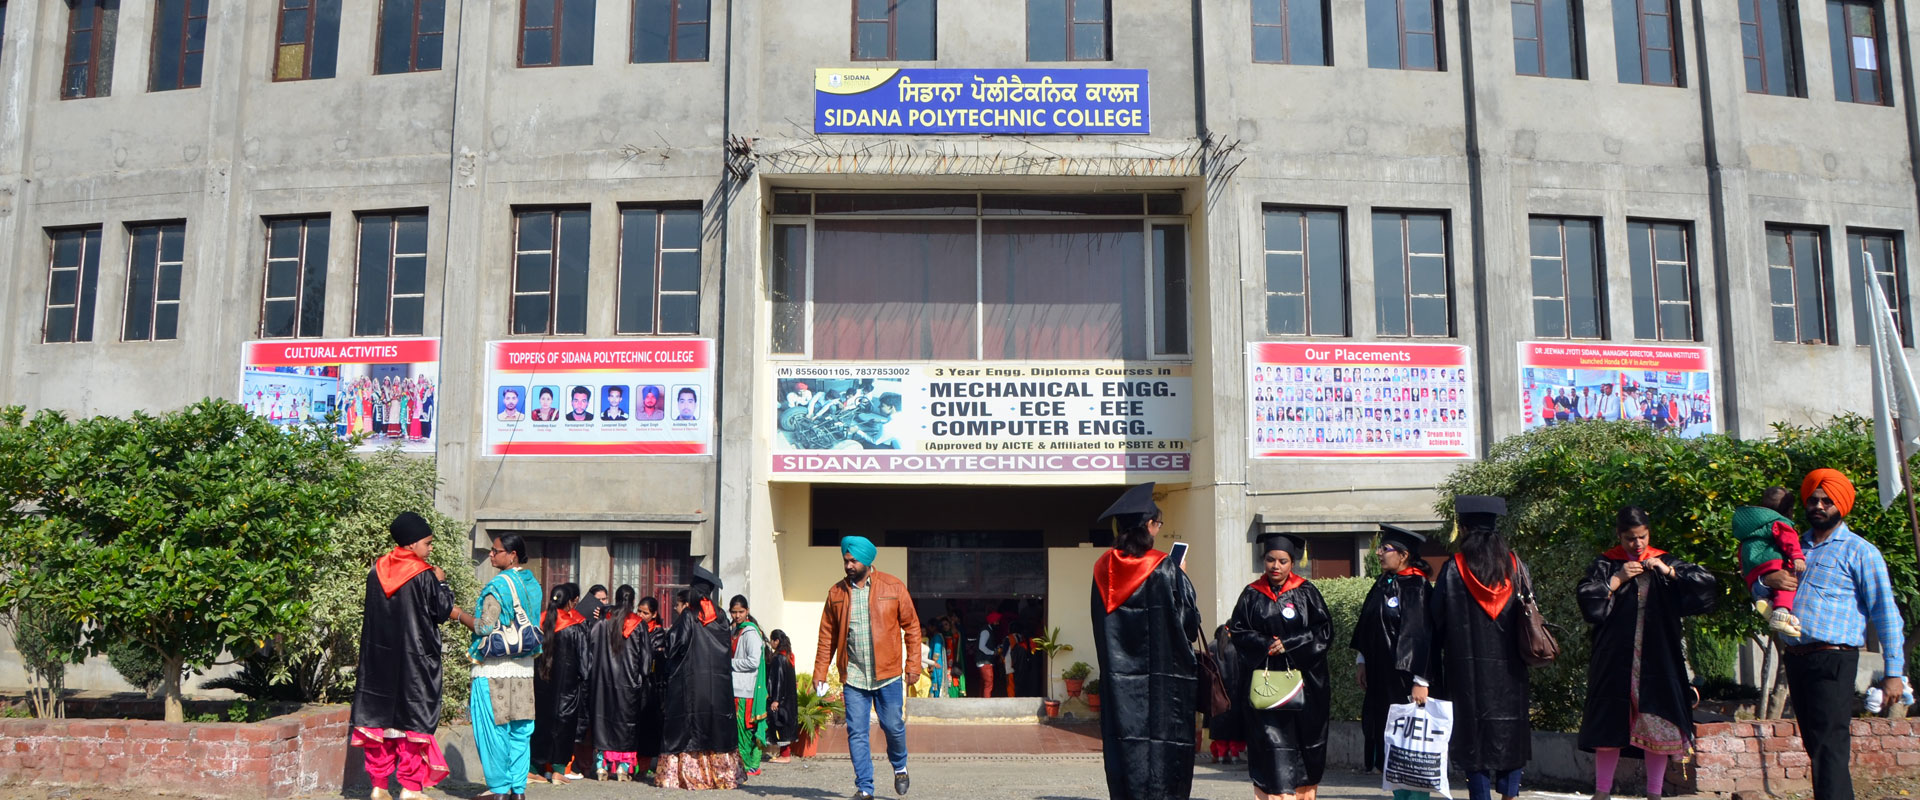 Sidana Polytechnic College, Amritsar Image